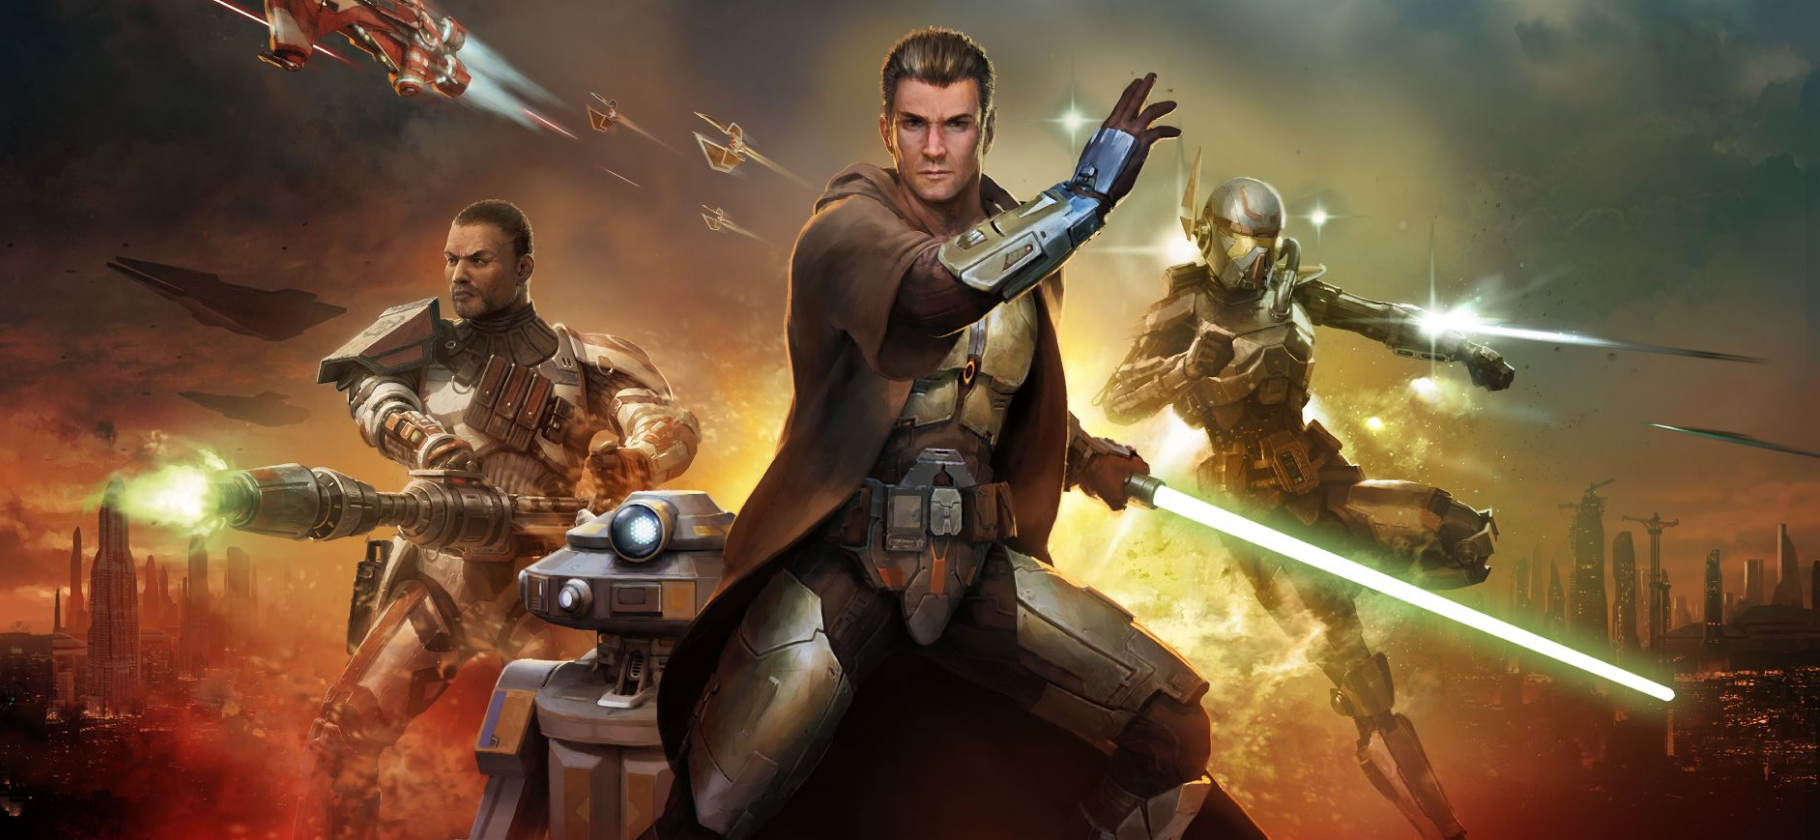 «Мир игры поистине огромен»: рекомендую Star Wars: The Old Republic